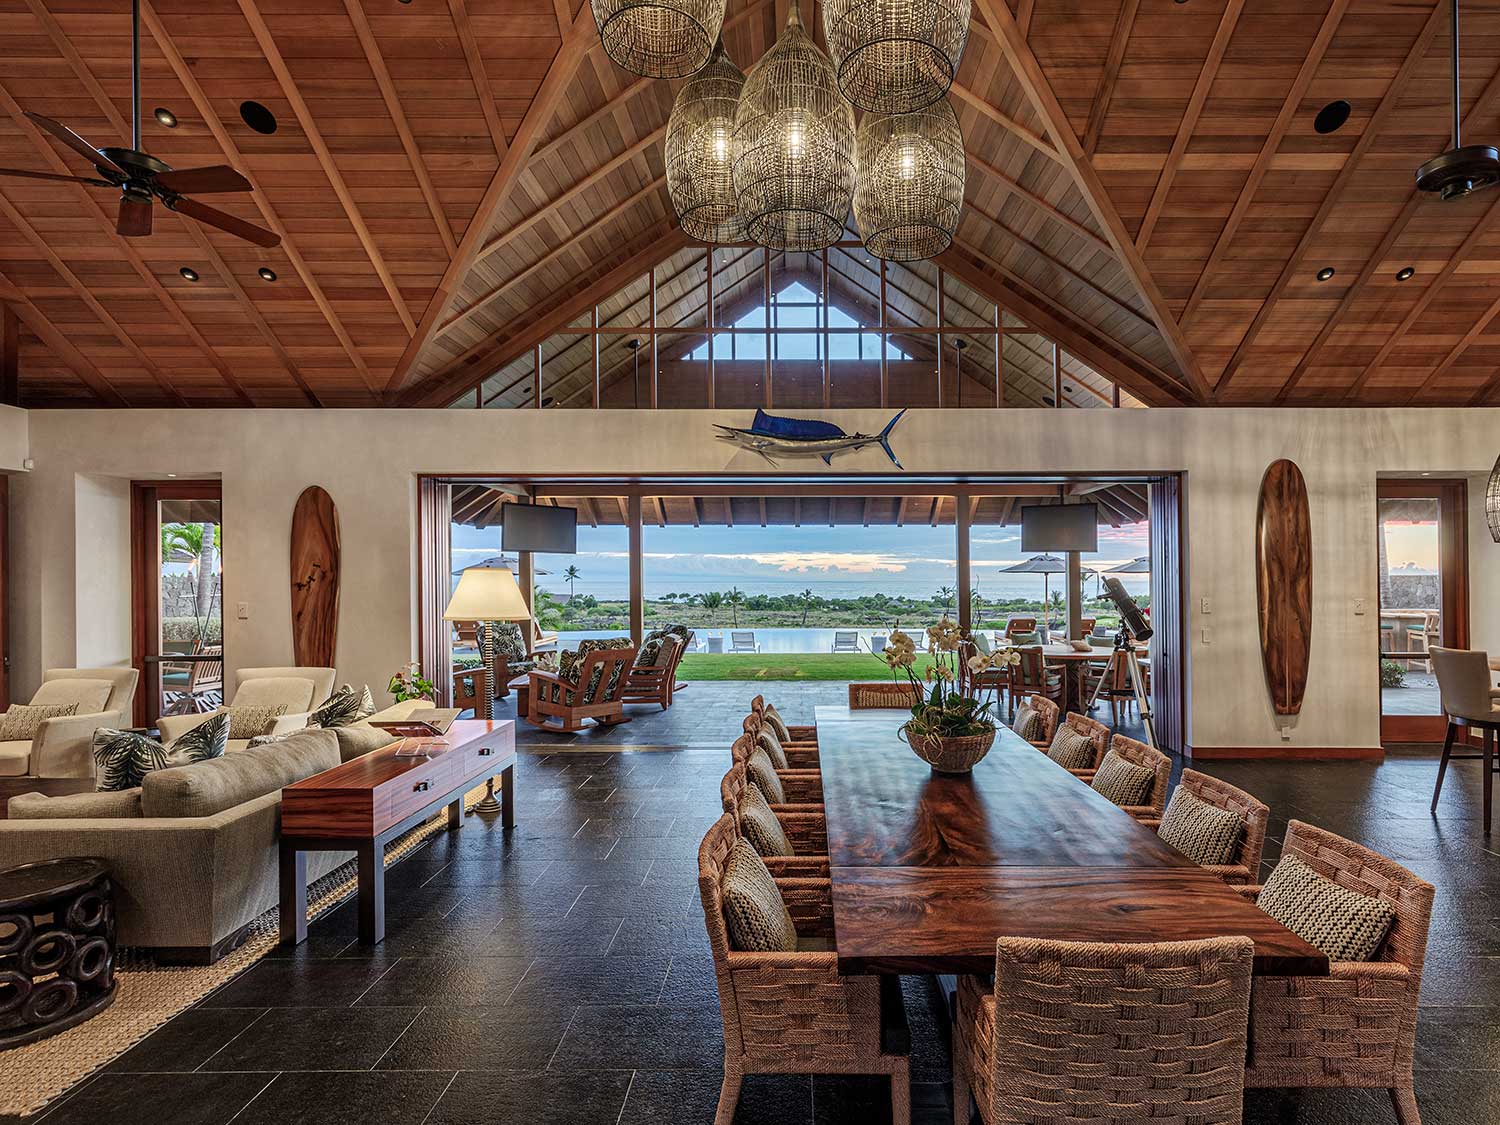 The interior design blends modern design with Hawaiian creativity